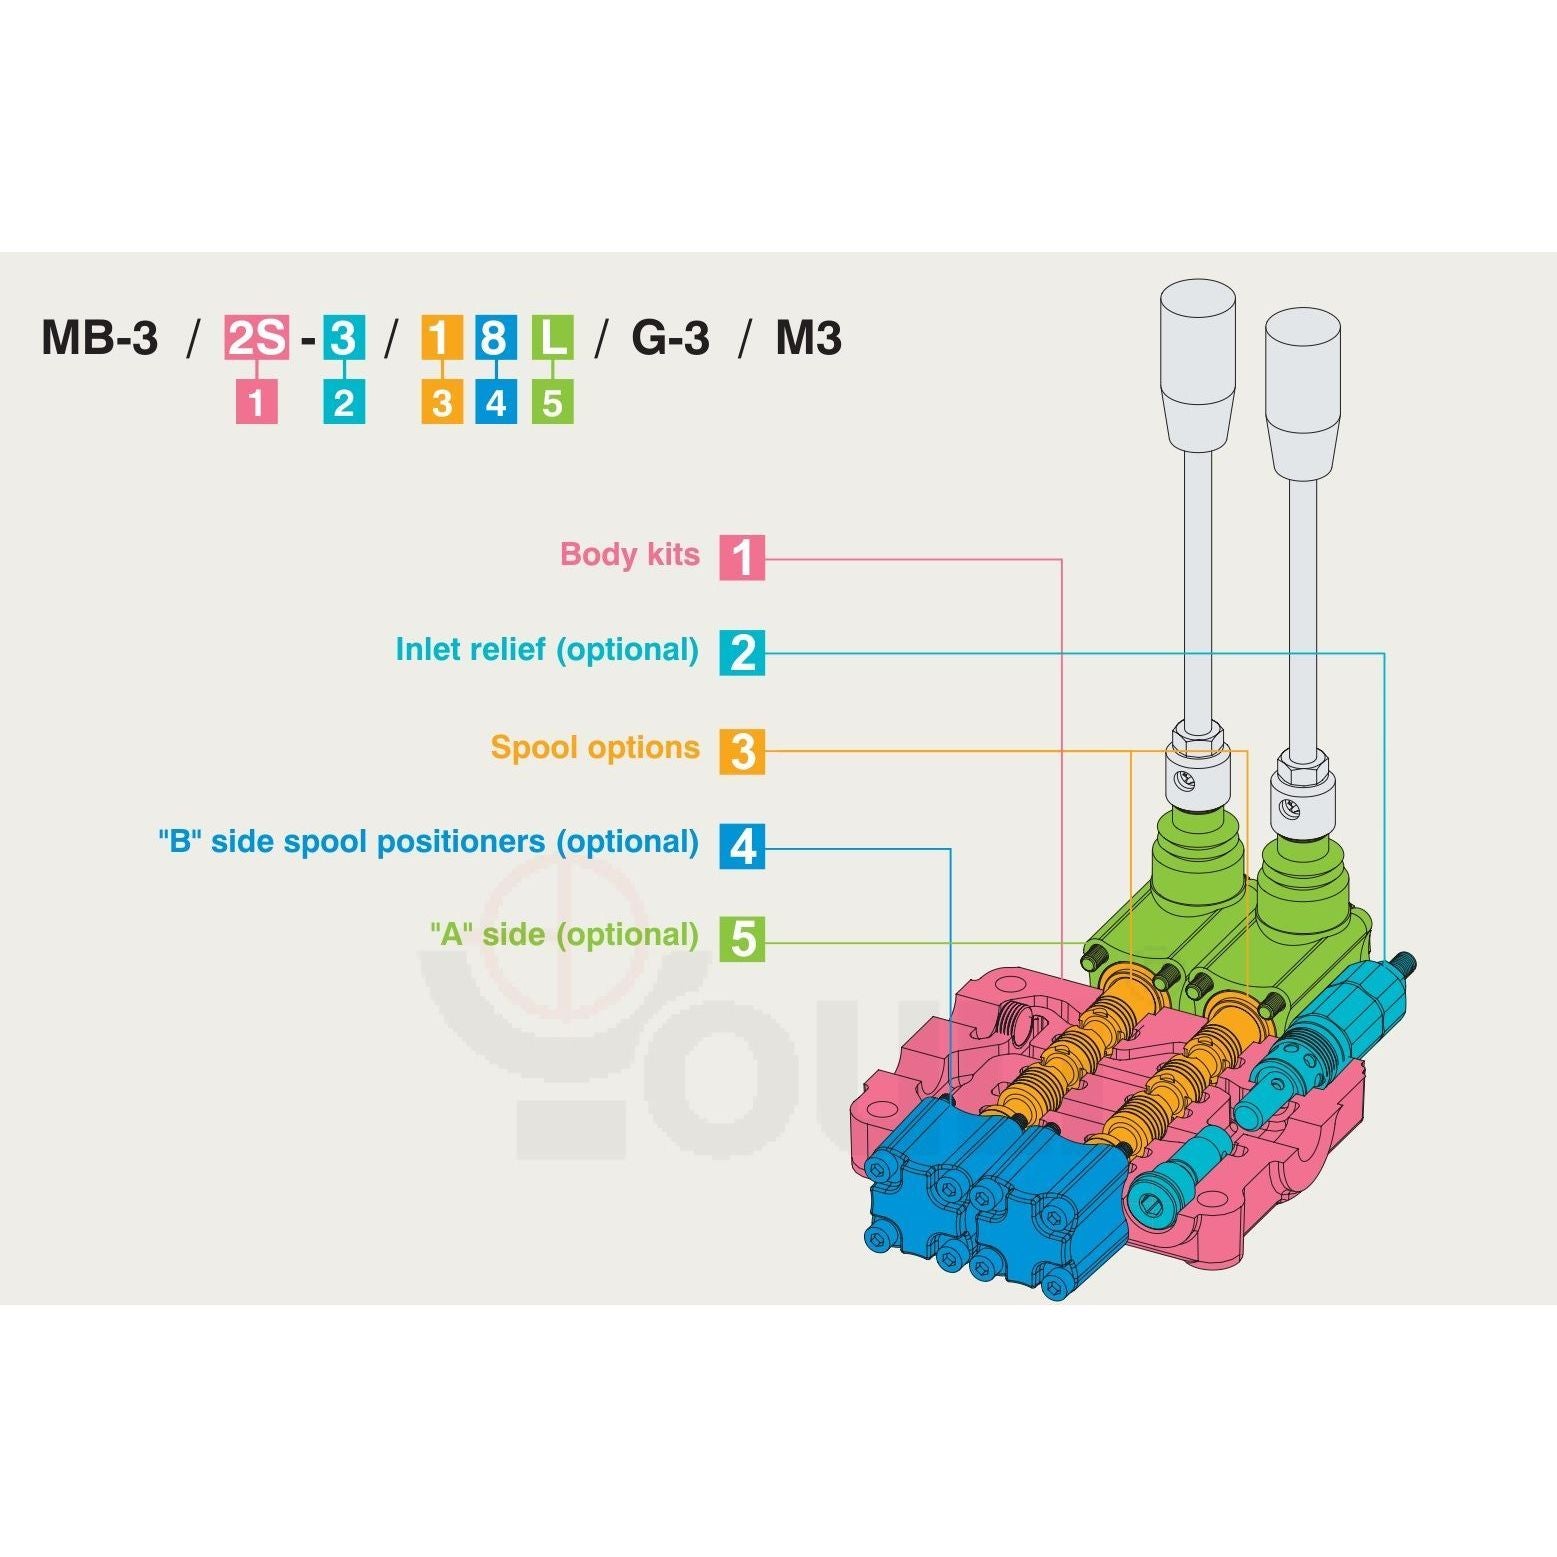 MB-3 Monoblock Valve, 5 Section : Youli MB-3 Series Monoblock Directional Control Valve, 5 Sections, 12 gpm, 900-2900 psi